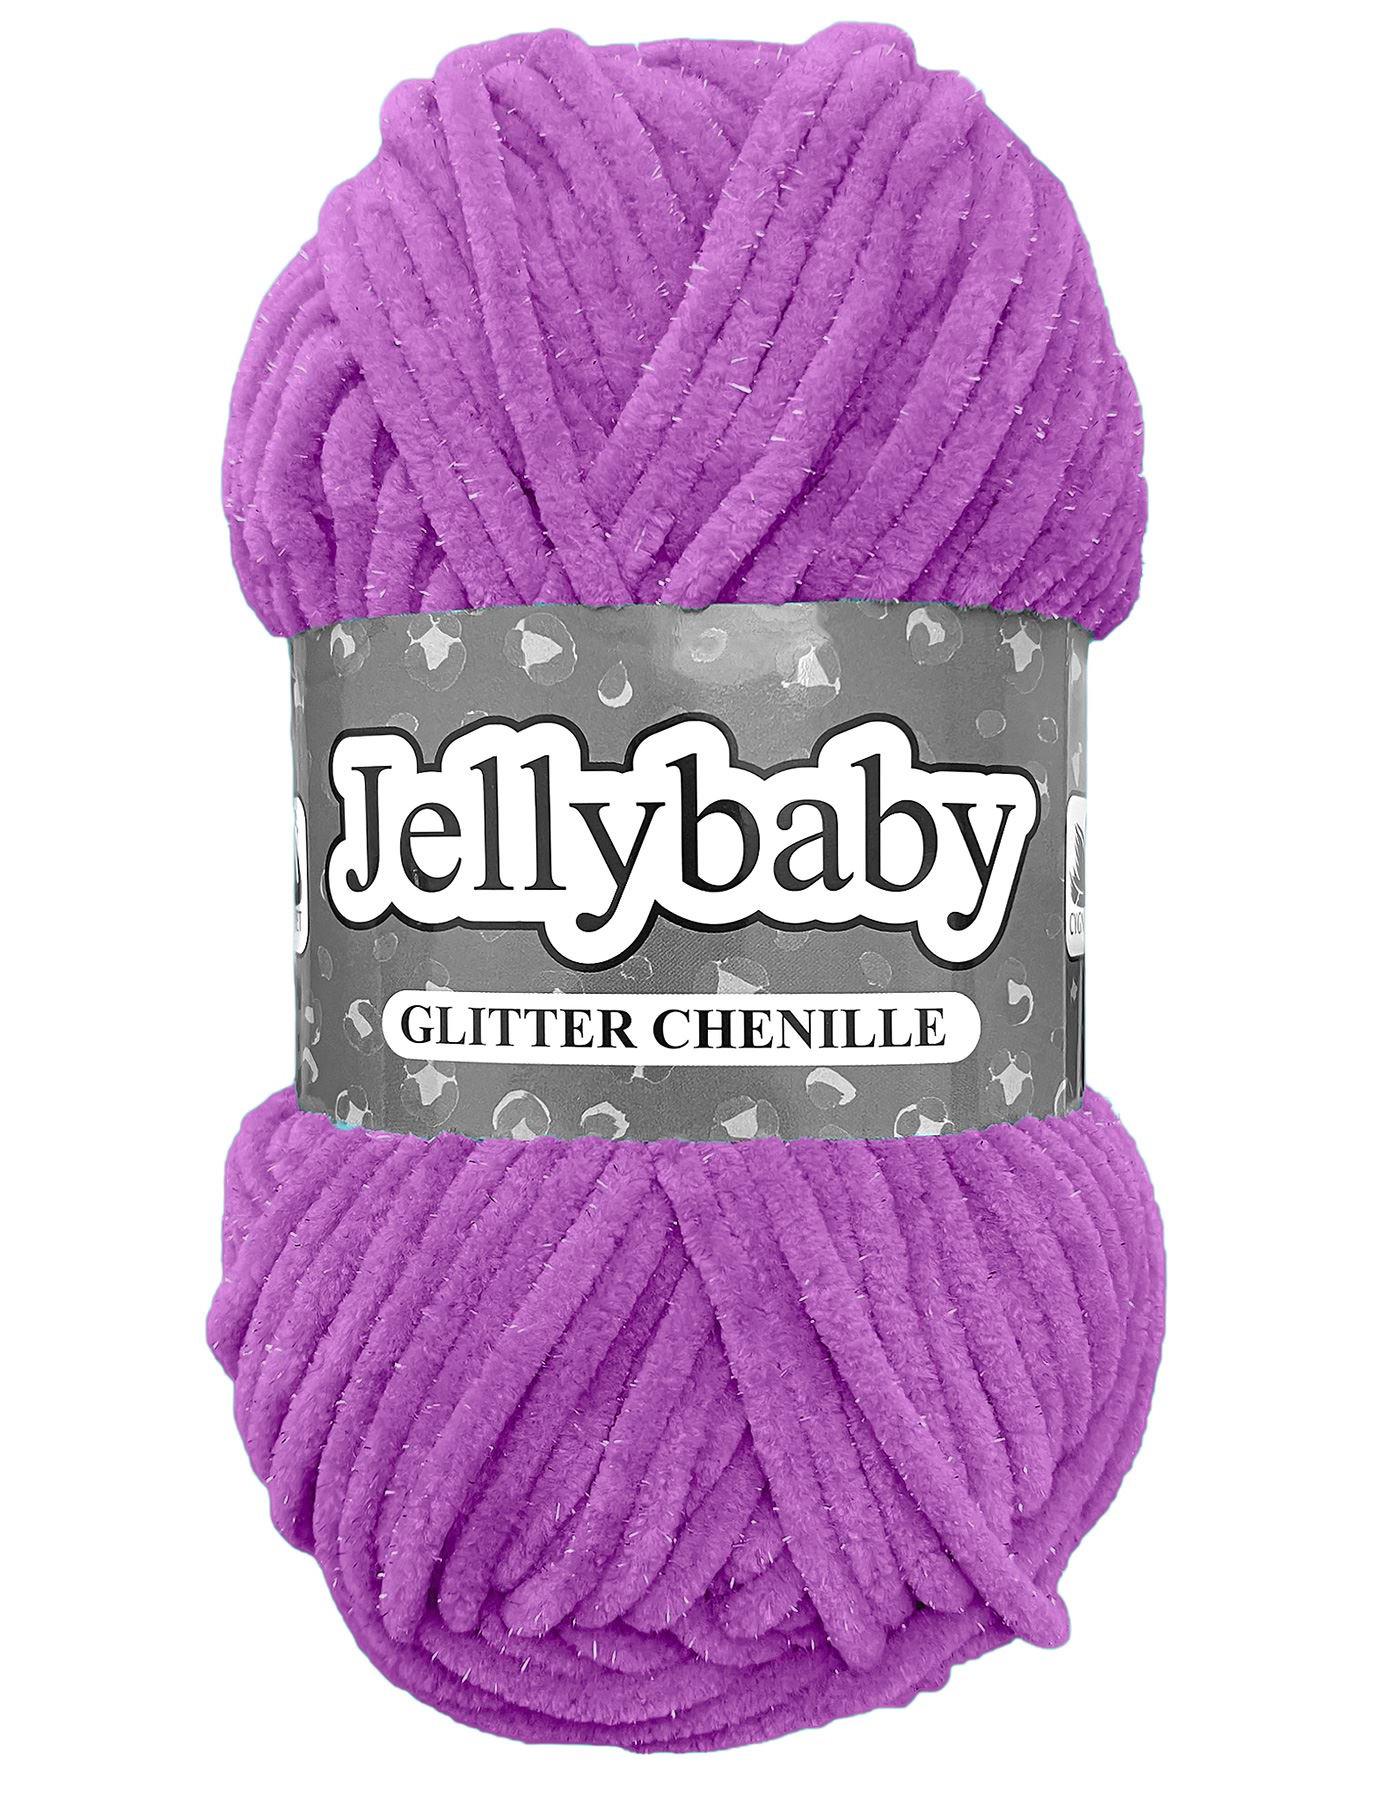 Cygnet Jellybaby Chenille Chunky - 100g - All Shades